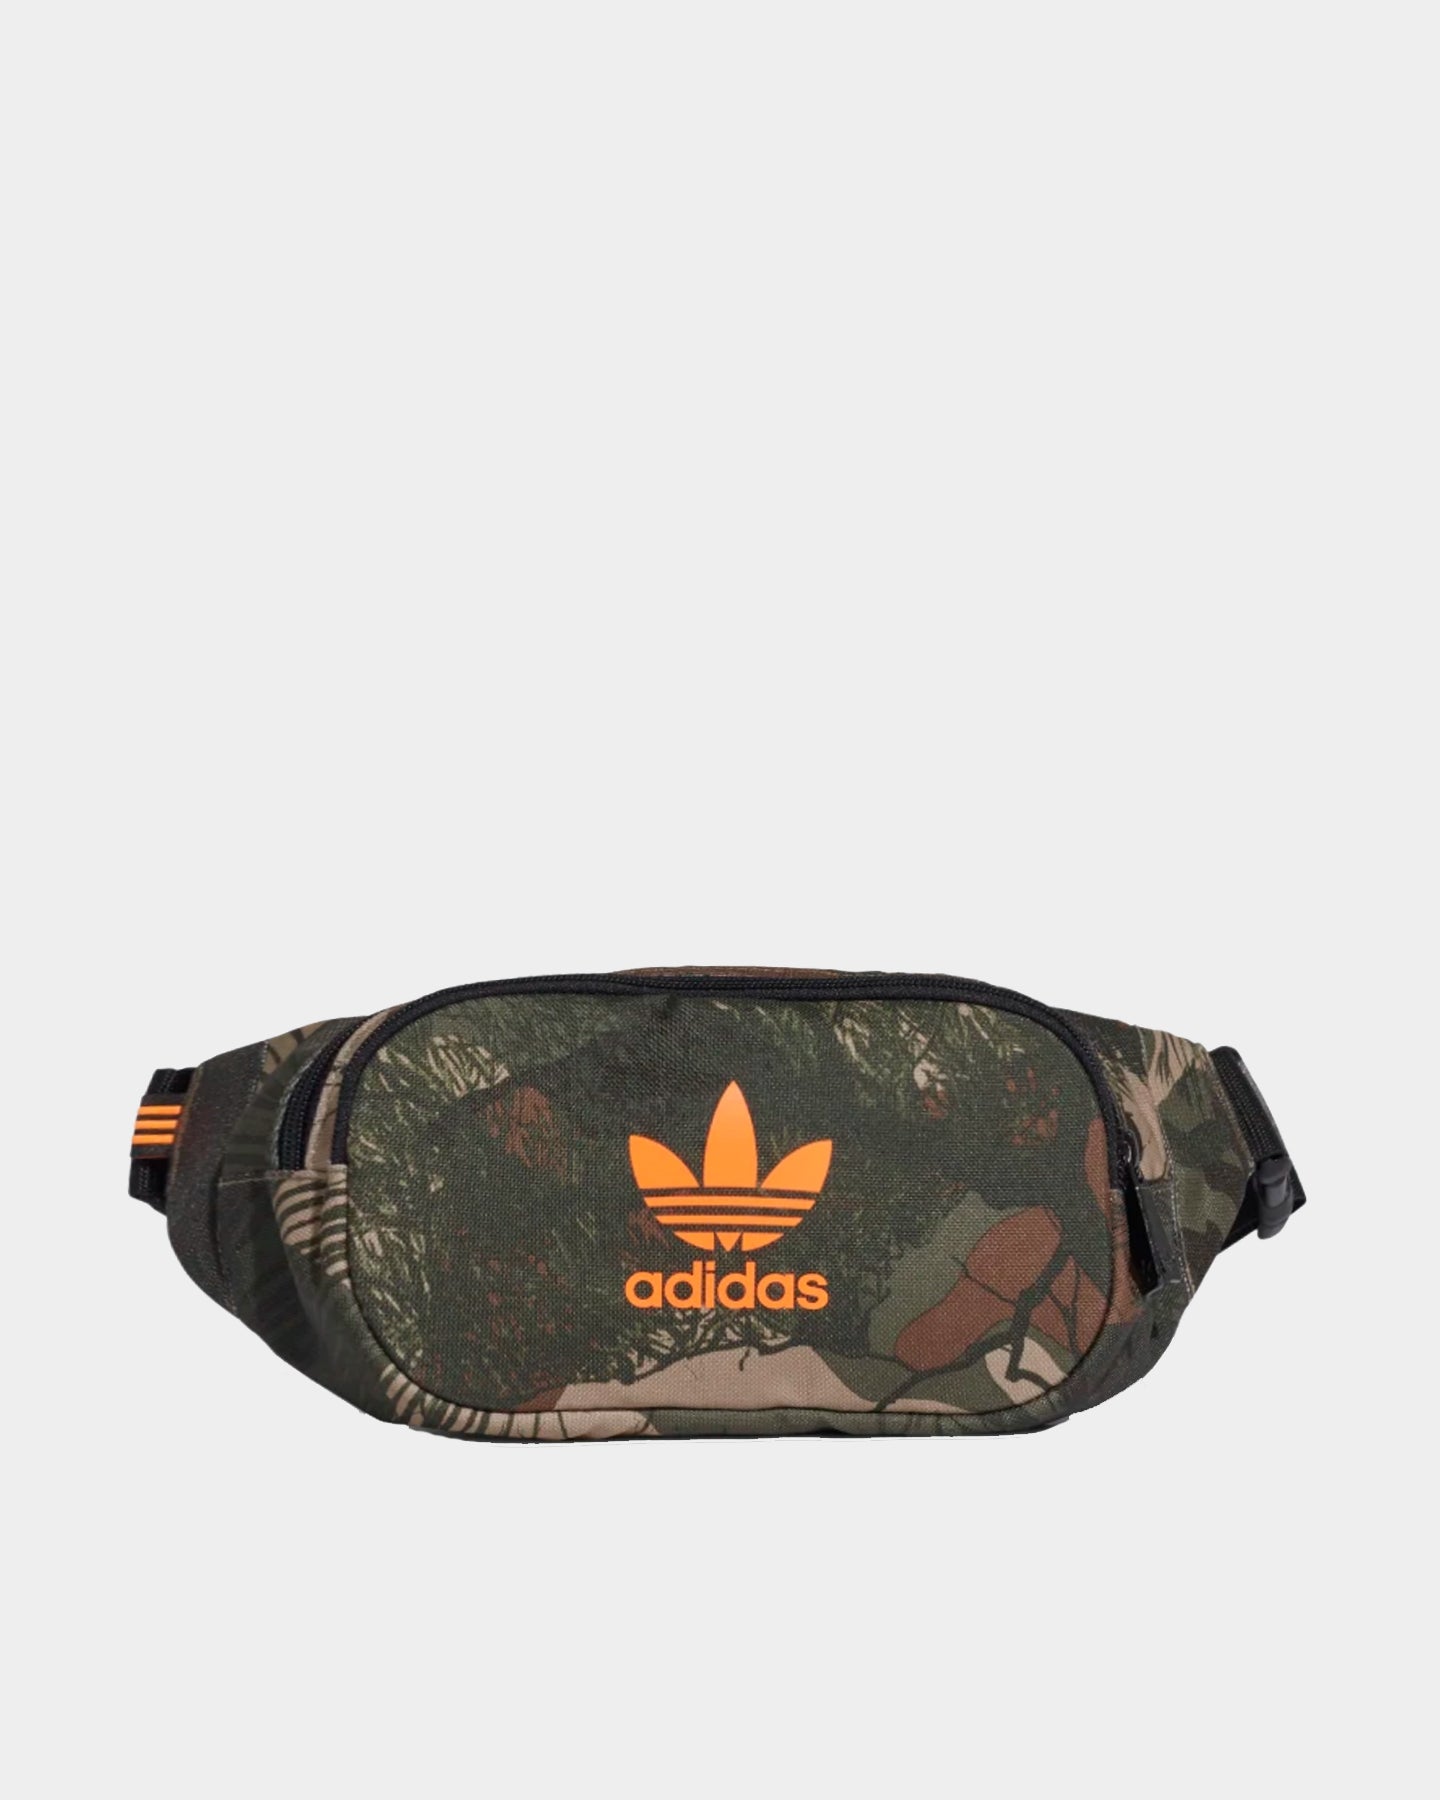 Adidas Men's Camo Waist Bag Hemp/Multi 